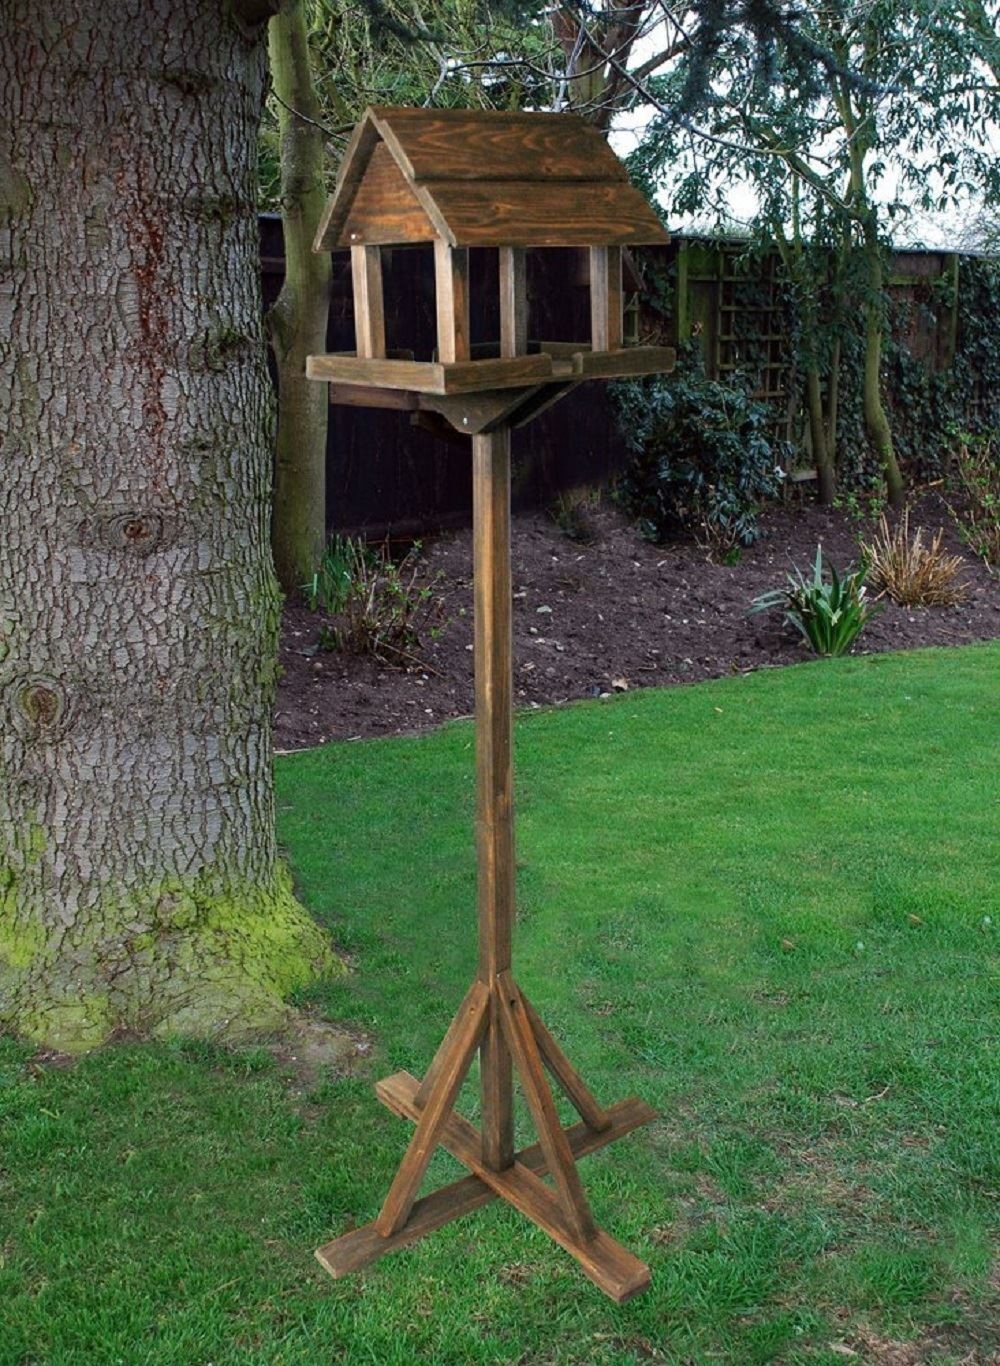 Deluxe Free Standing Wooden Garden Outdoor Bird Feeding Feeder Table Station